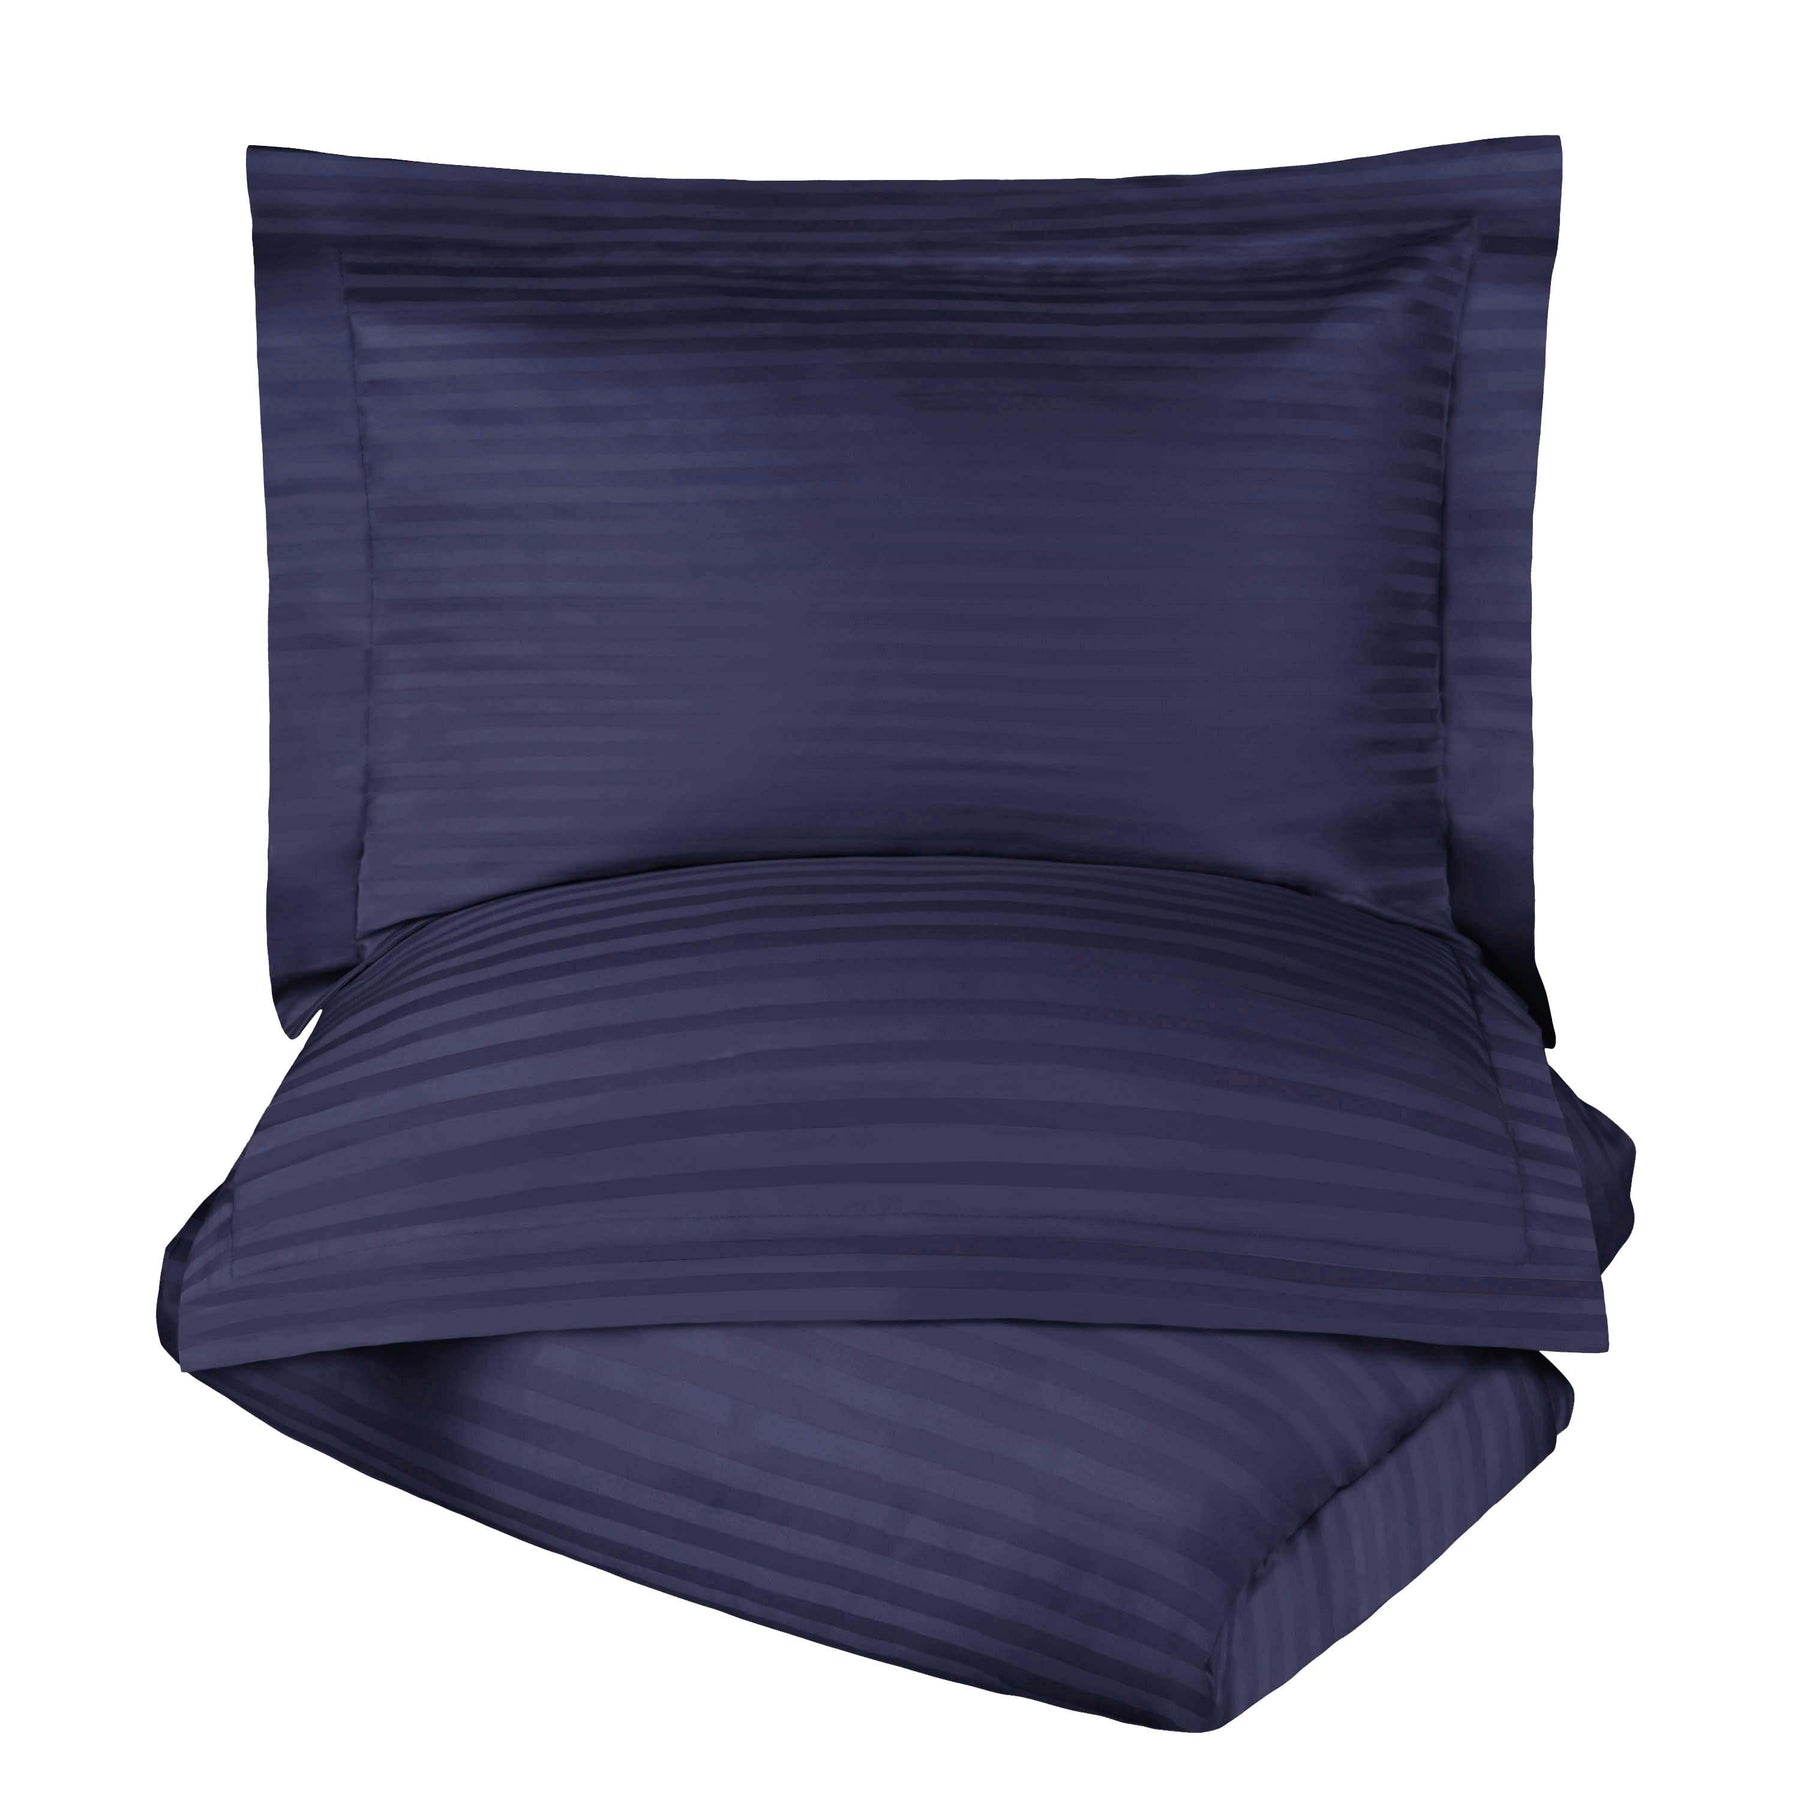 Superior Premium 600 Thread Count Egyptian Cotton Solid Duvet Cover Set -  Navy Blue